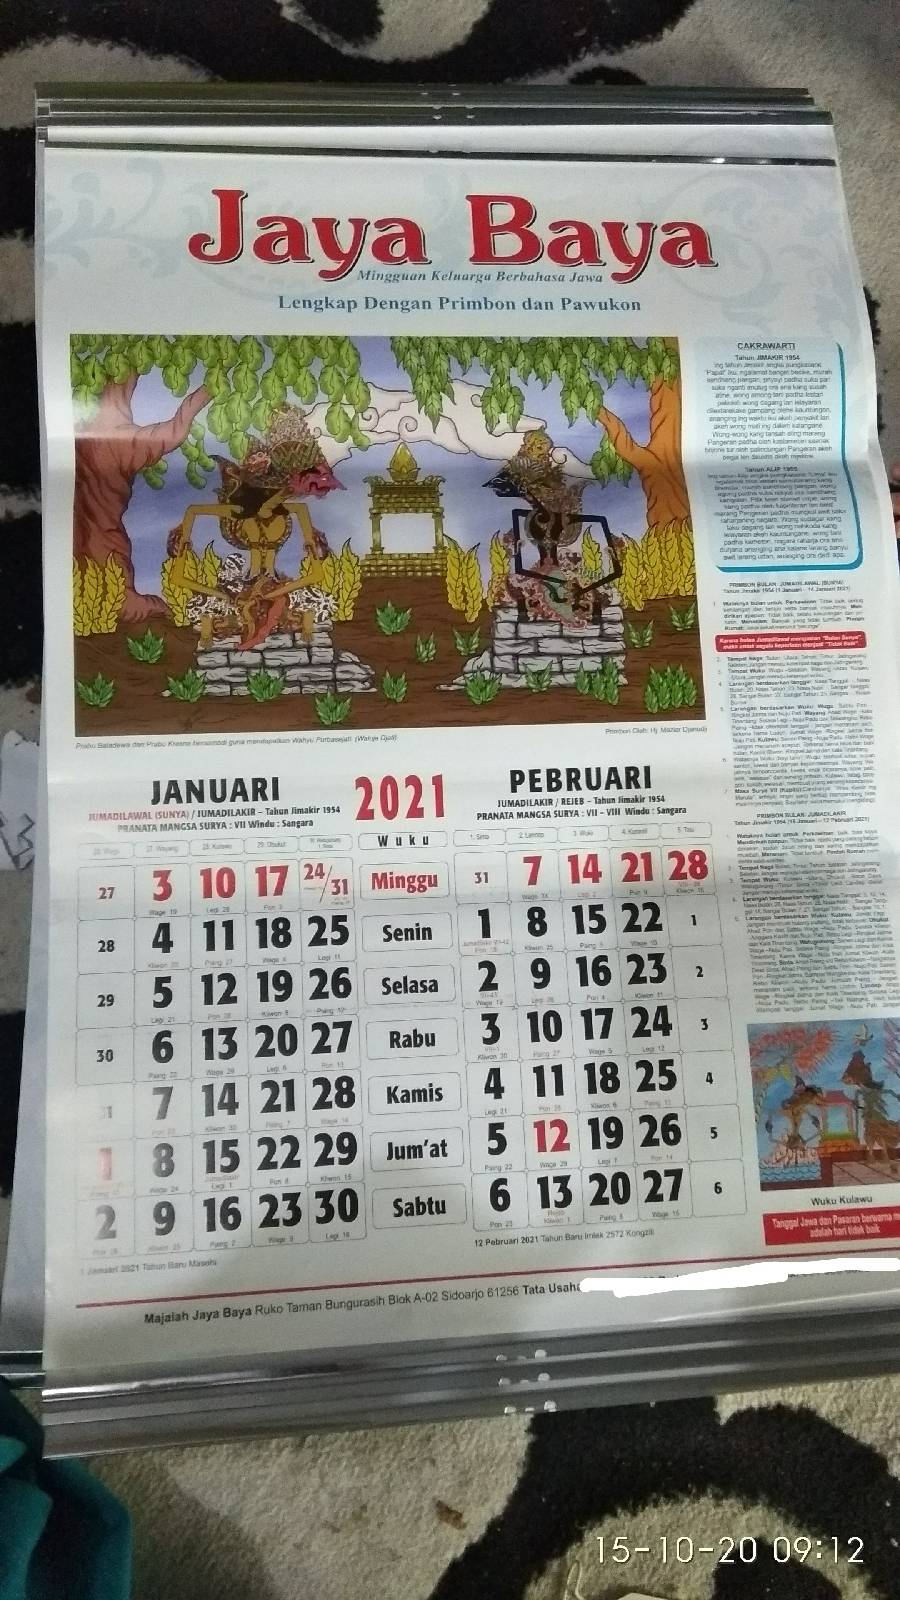 Балийский сака календарь - balinese saka calendar - wikipedia